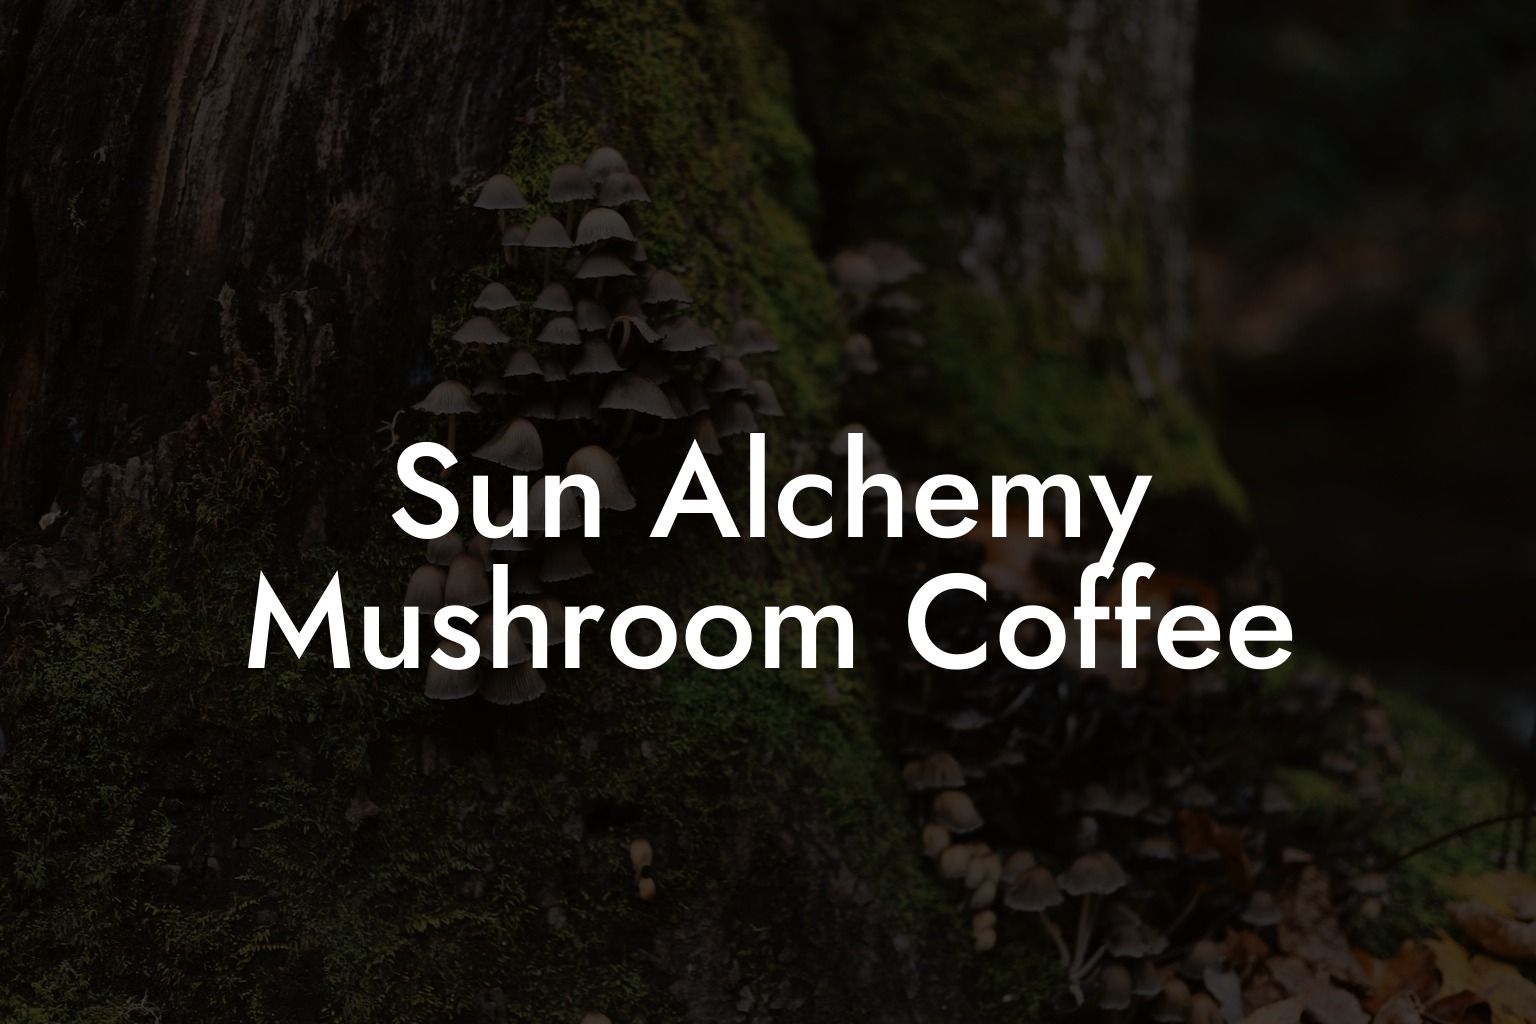 Sun Alchemy Mushroom Coffee